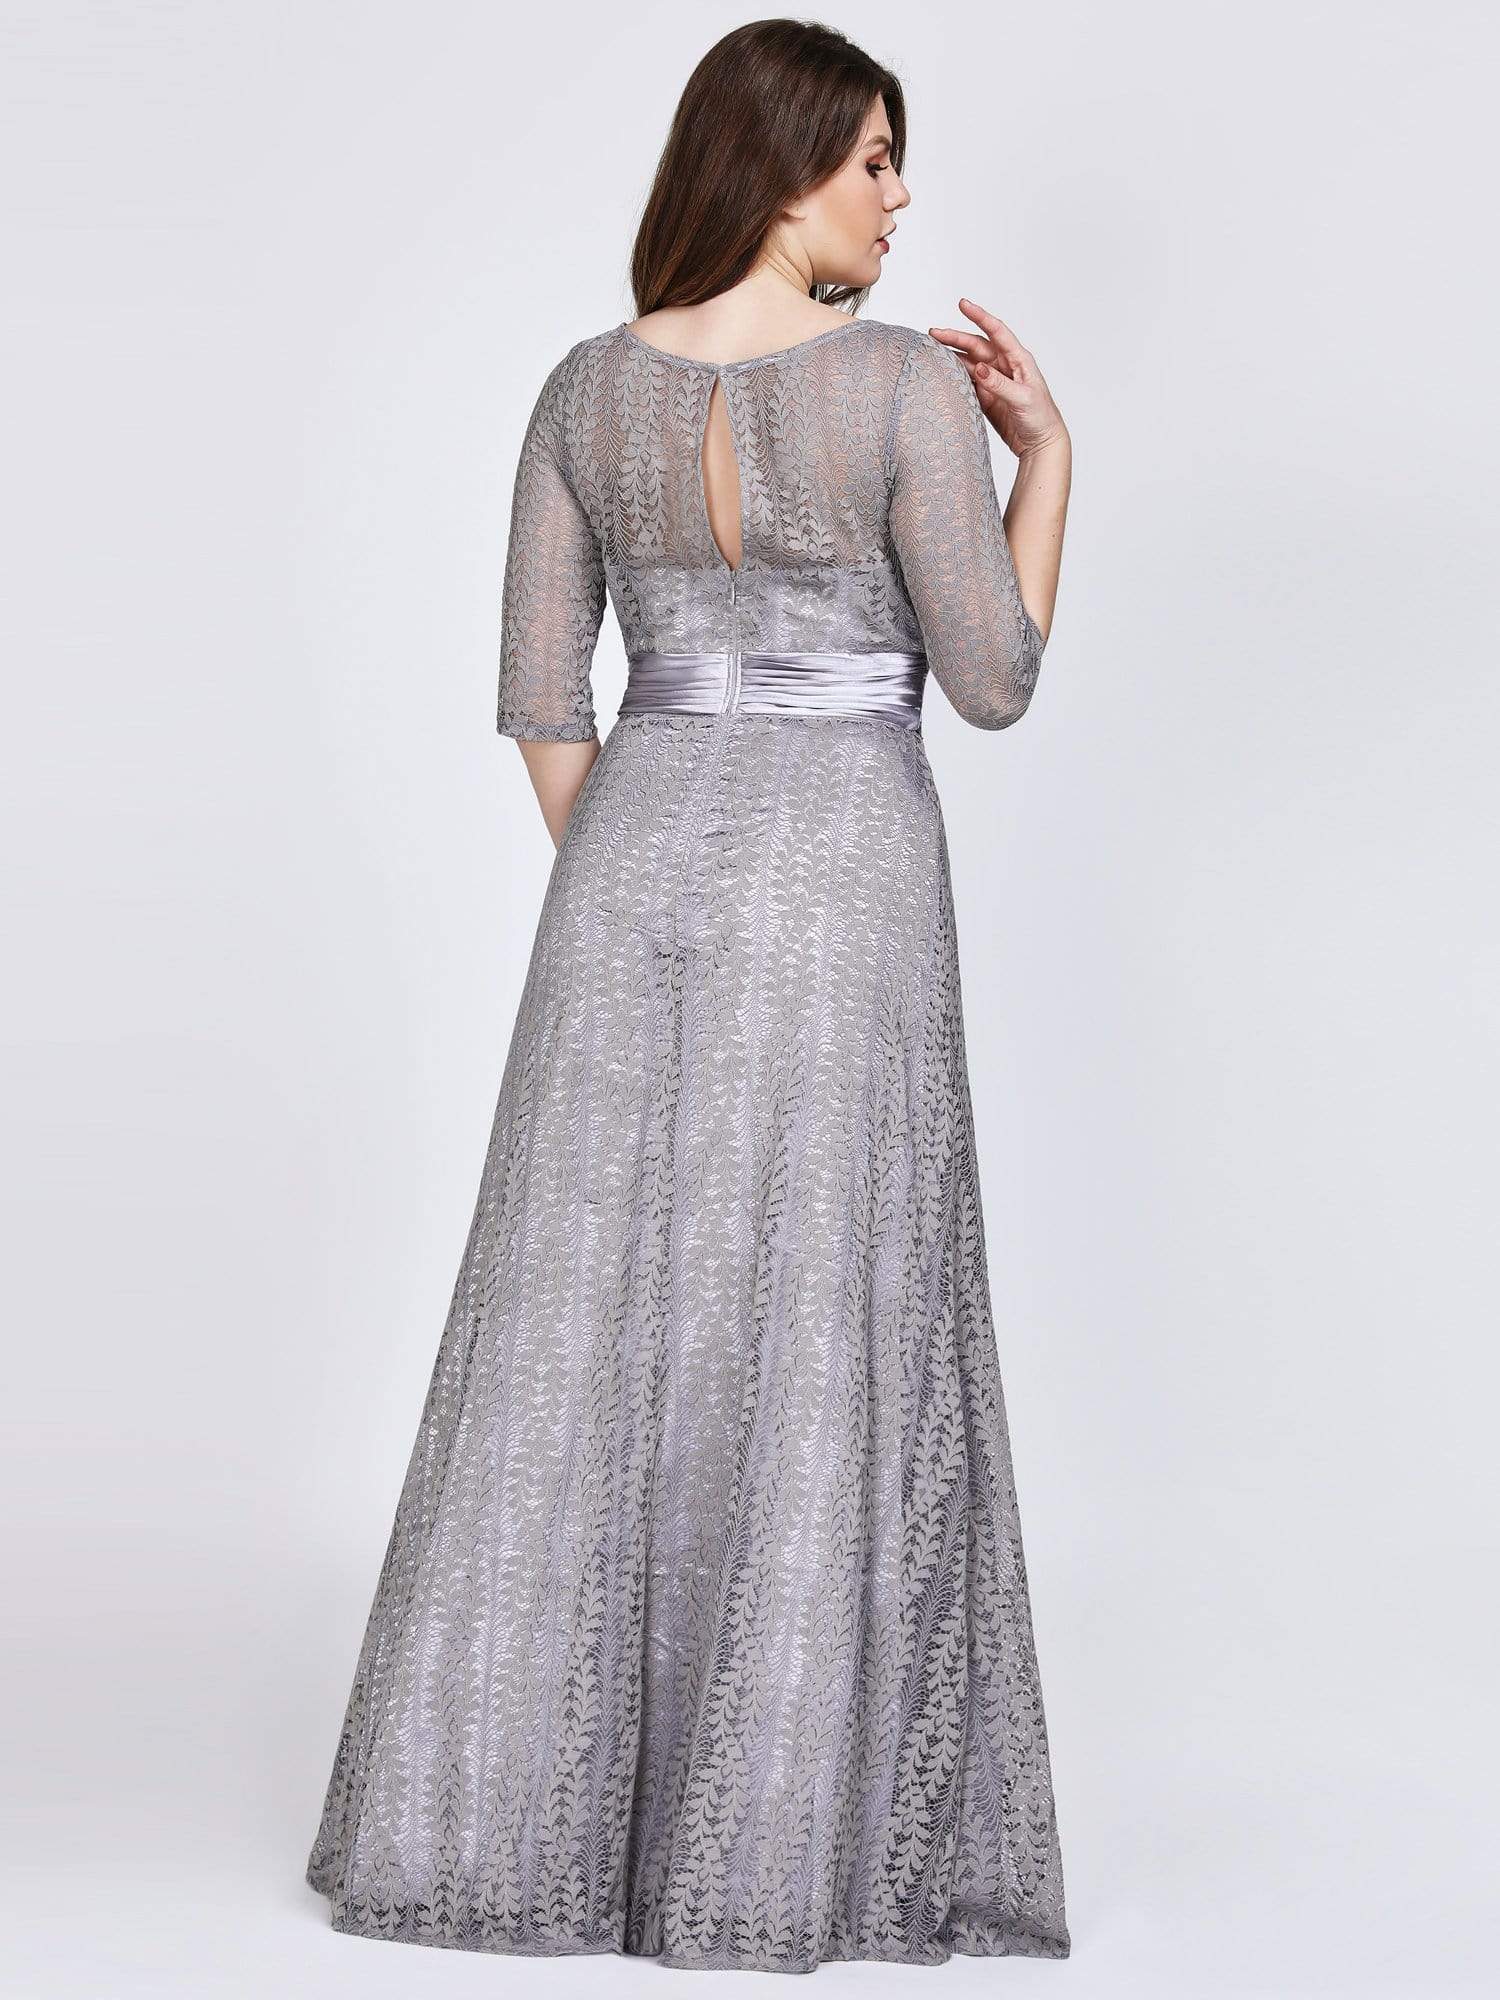 Round Neck Plus Size Dress Size 22 Style 78088 - MISS LESTER'S 